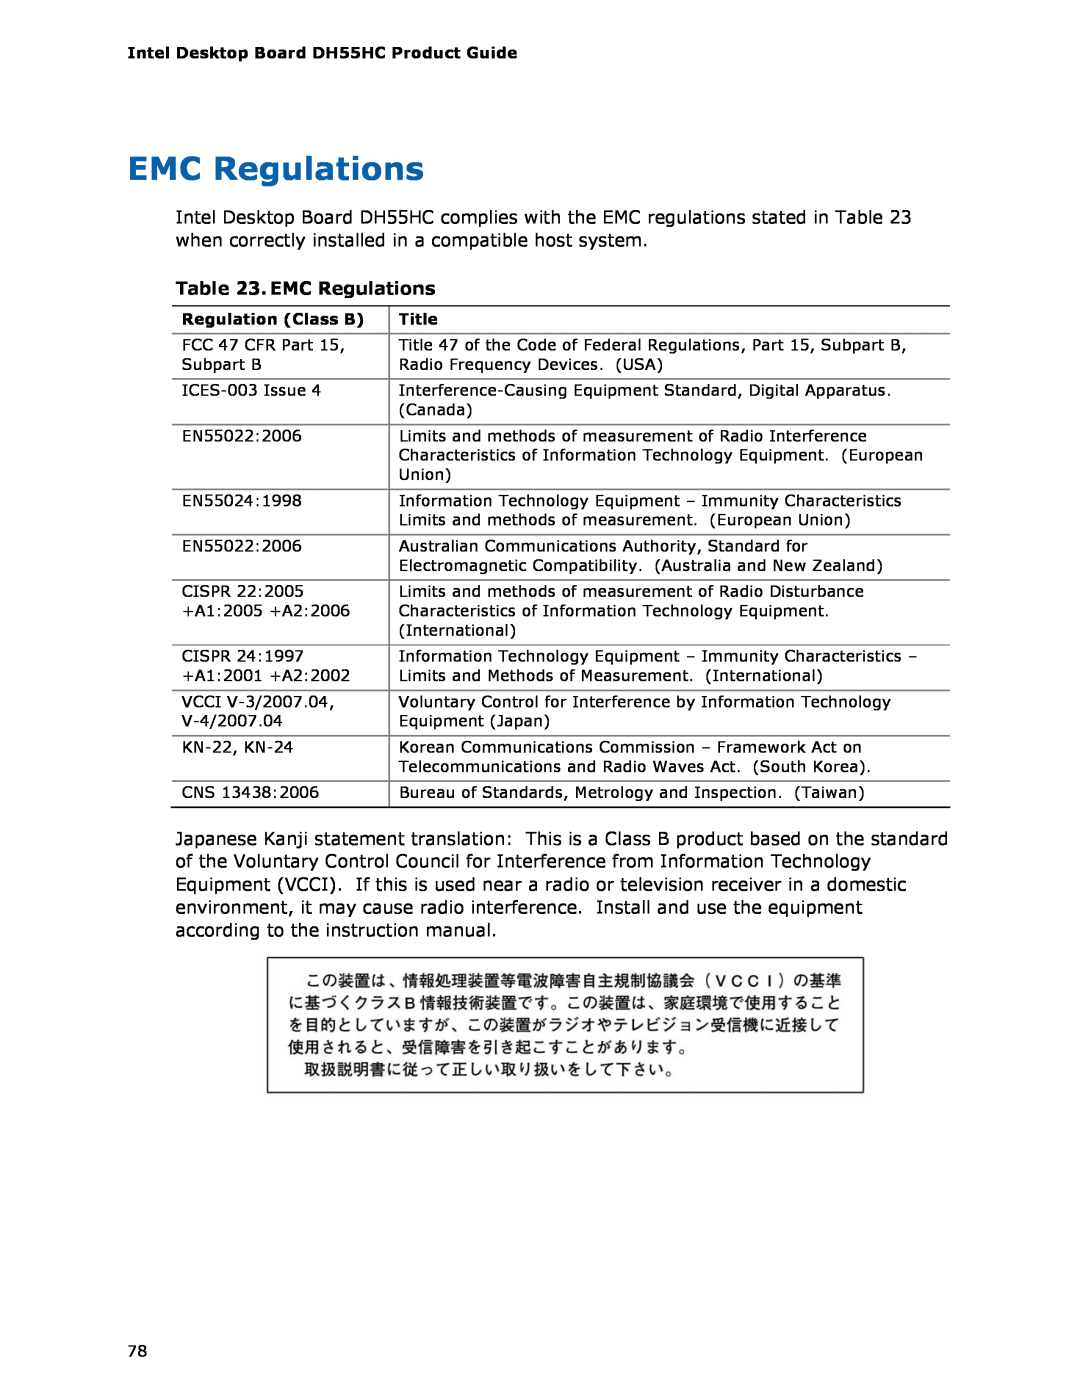 Intel BOXDH55HC manual EMC Regulations 